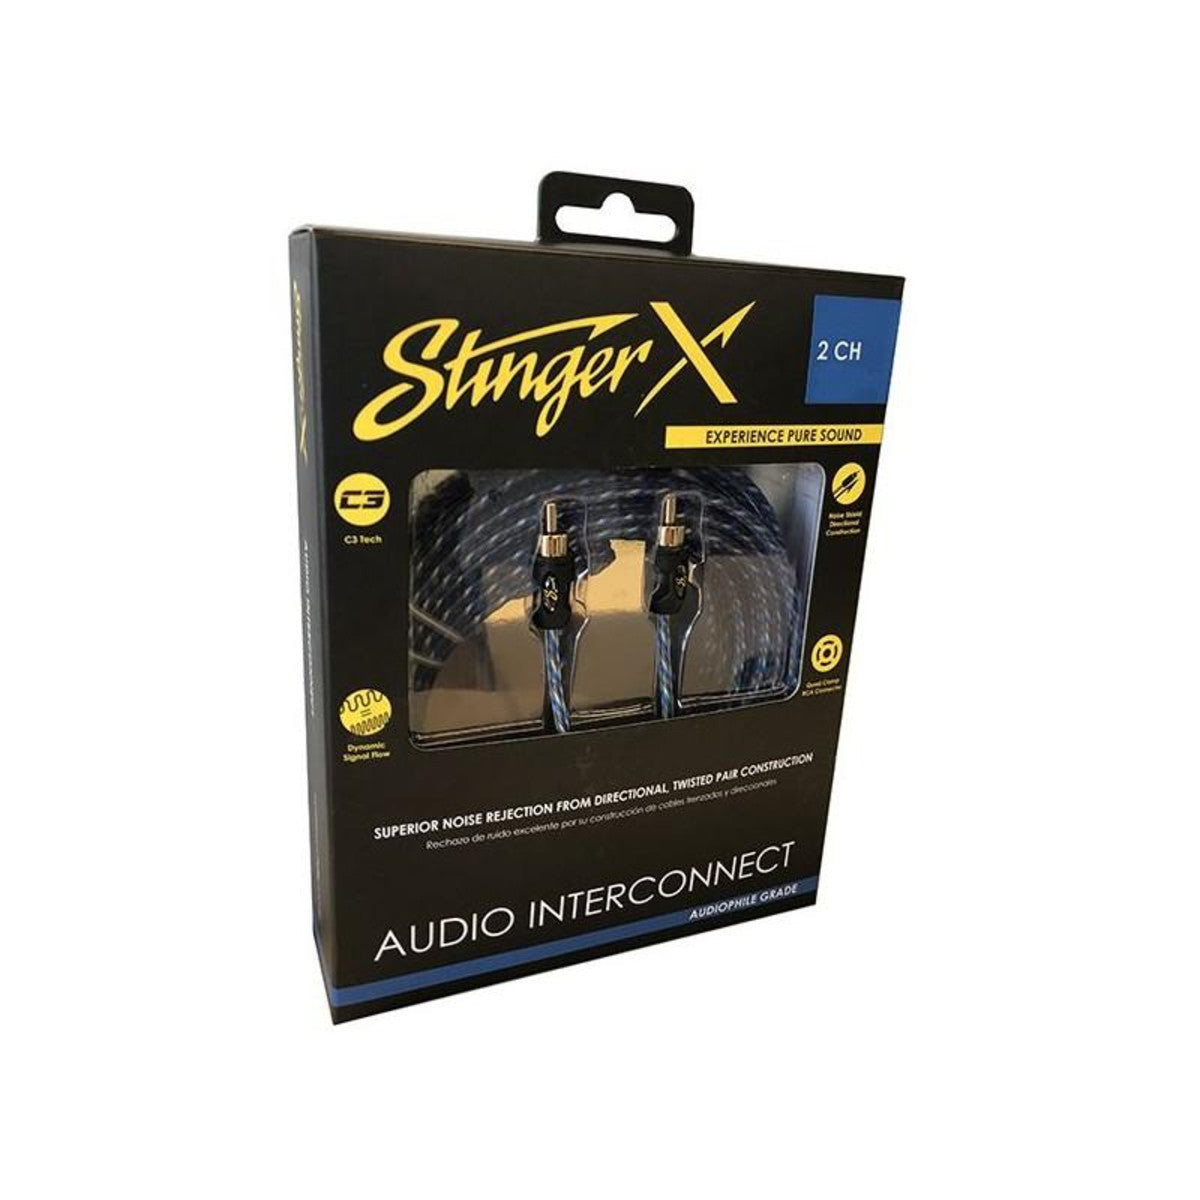 Stinger X1 series rca cables